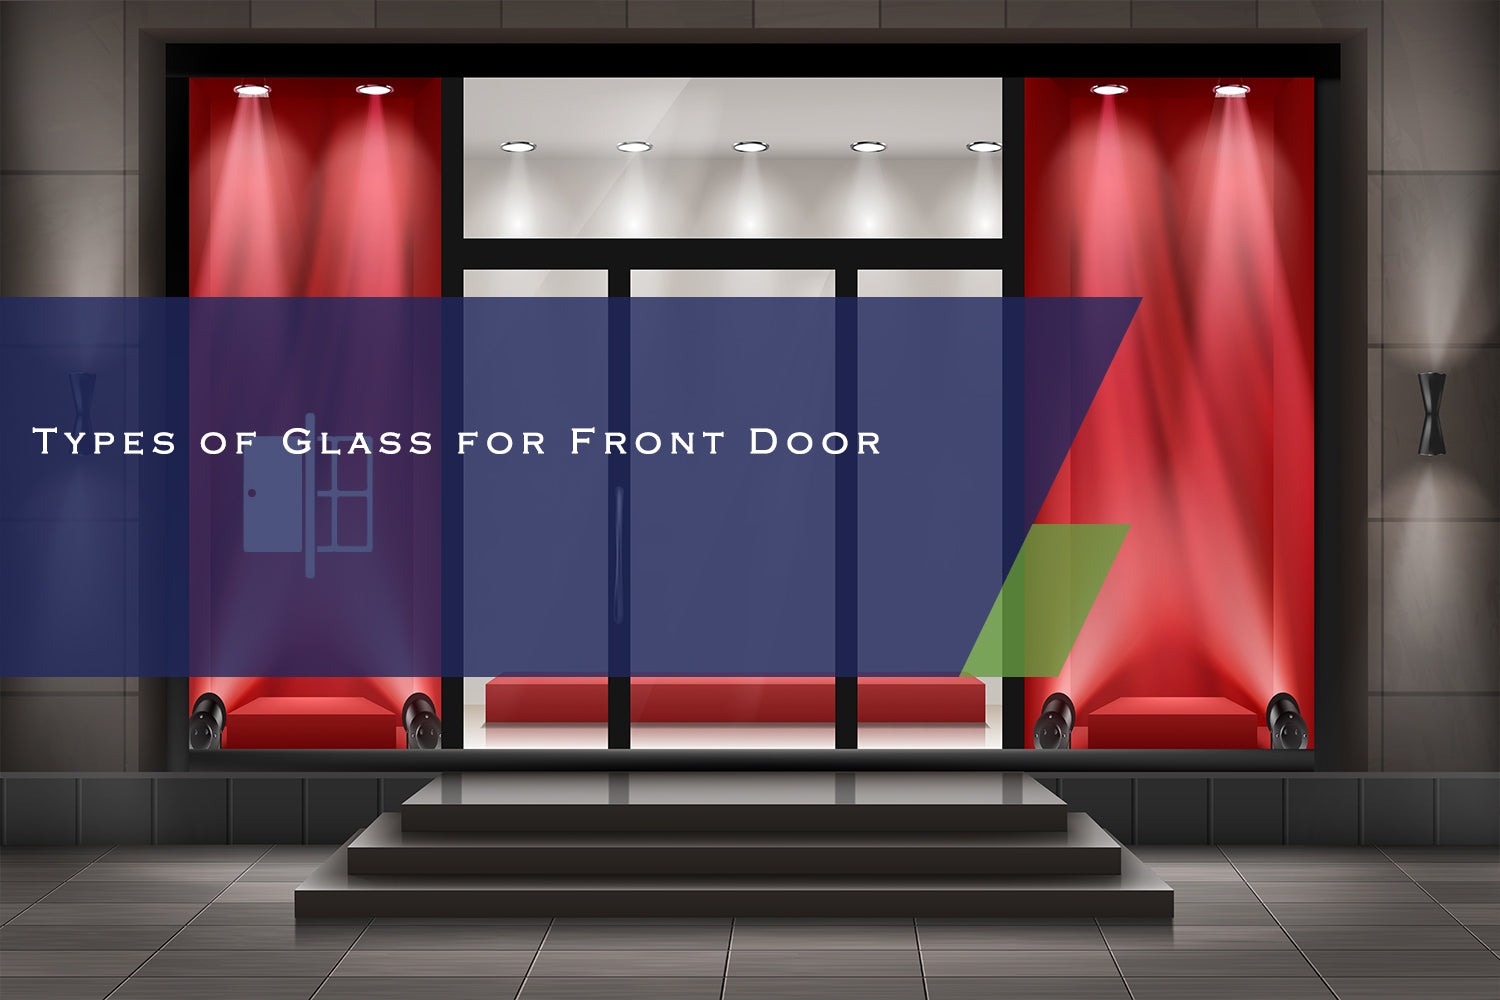 Types of Glass for Front Door